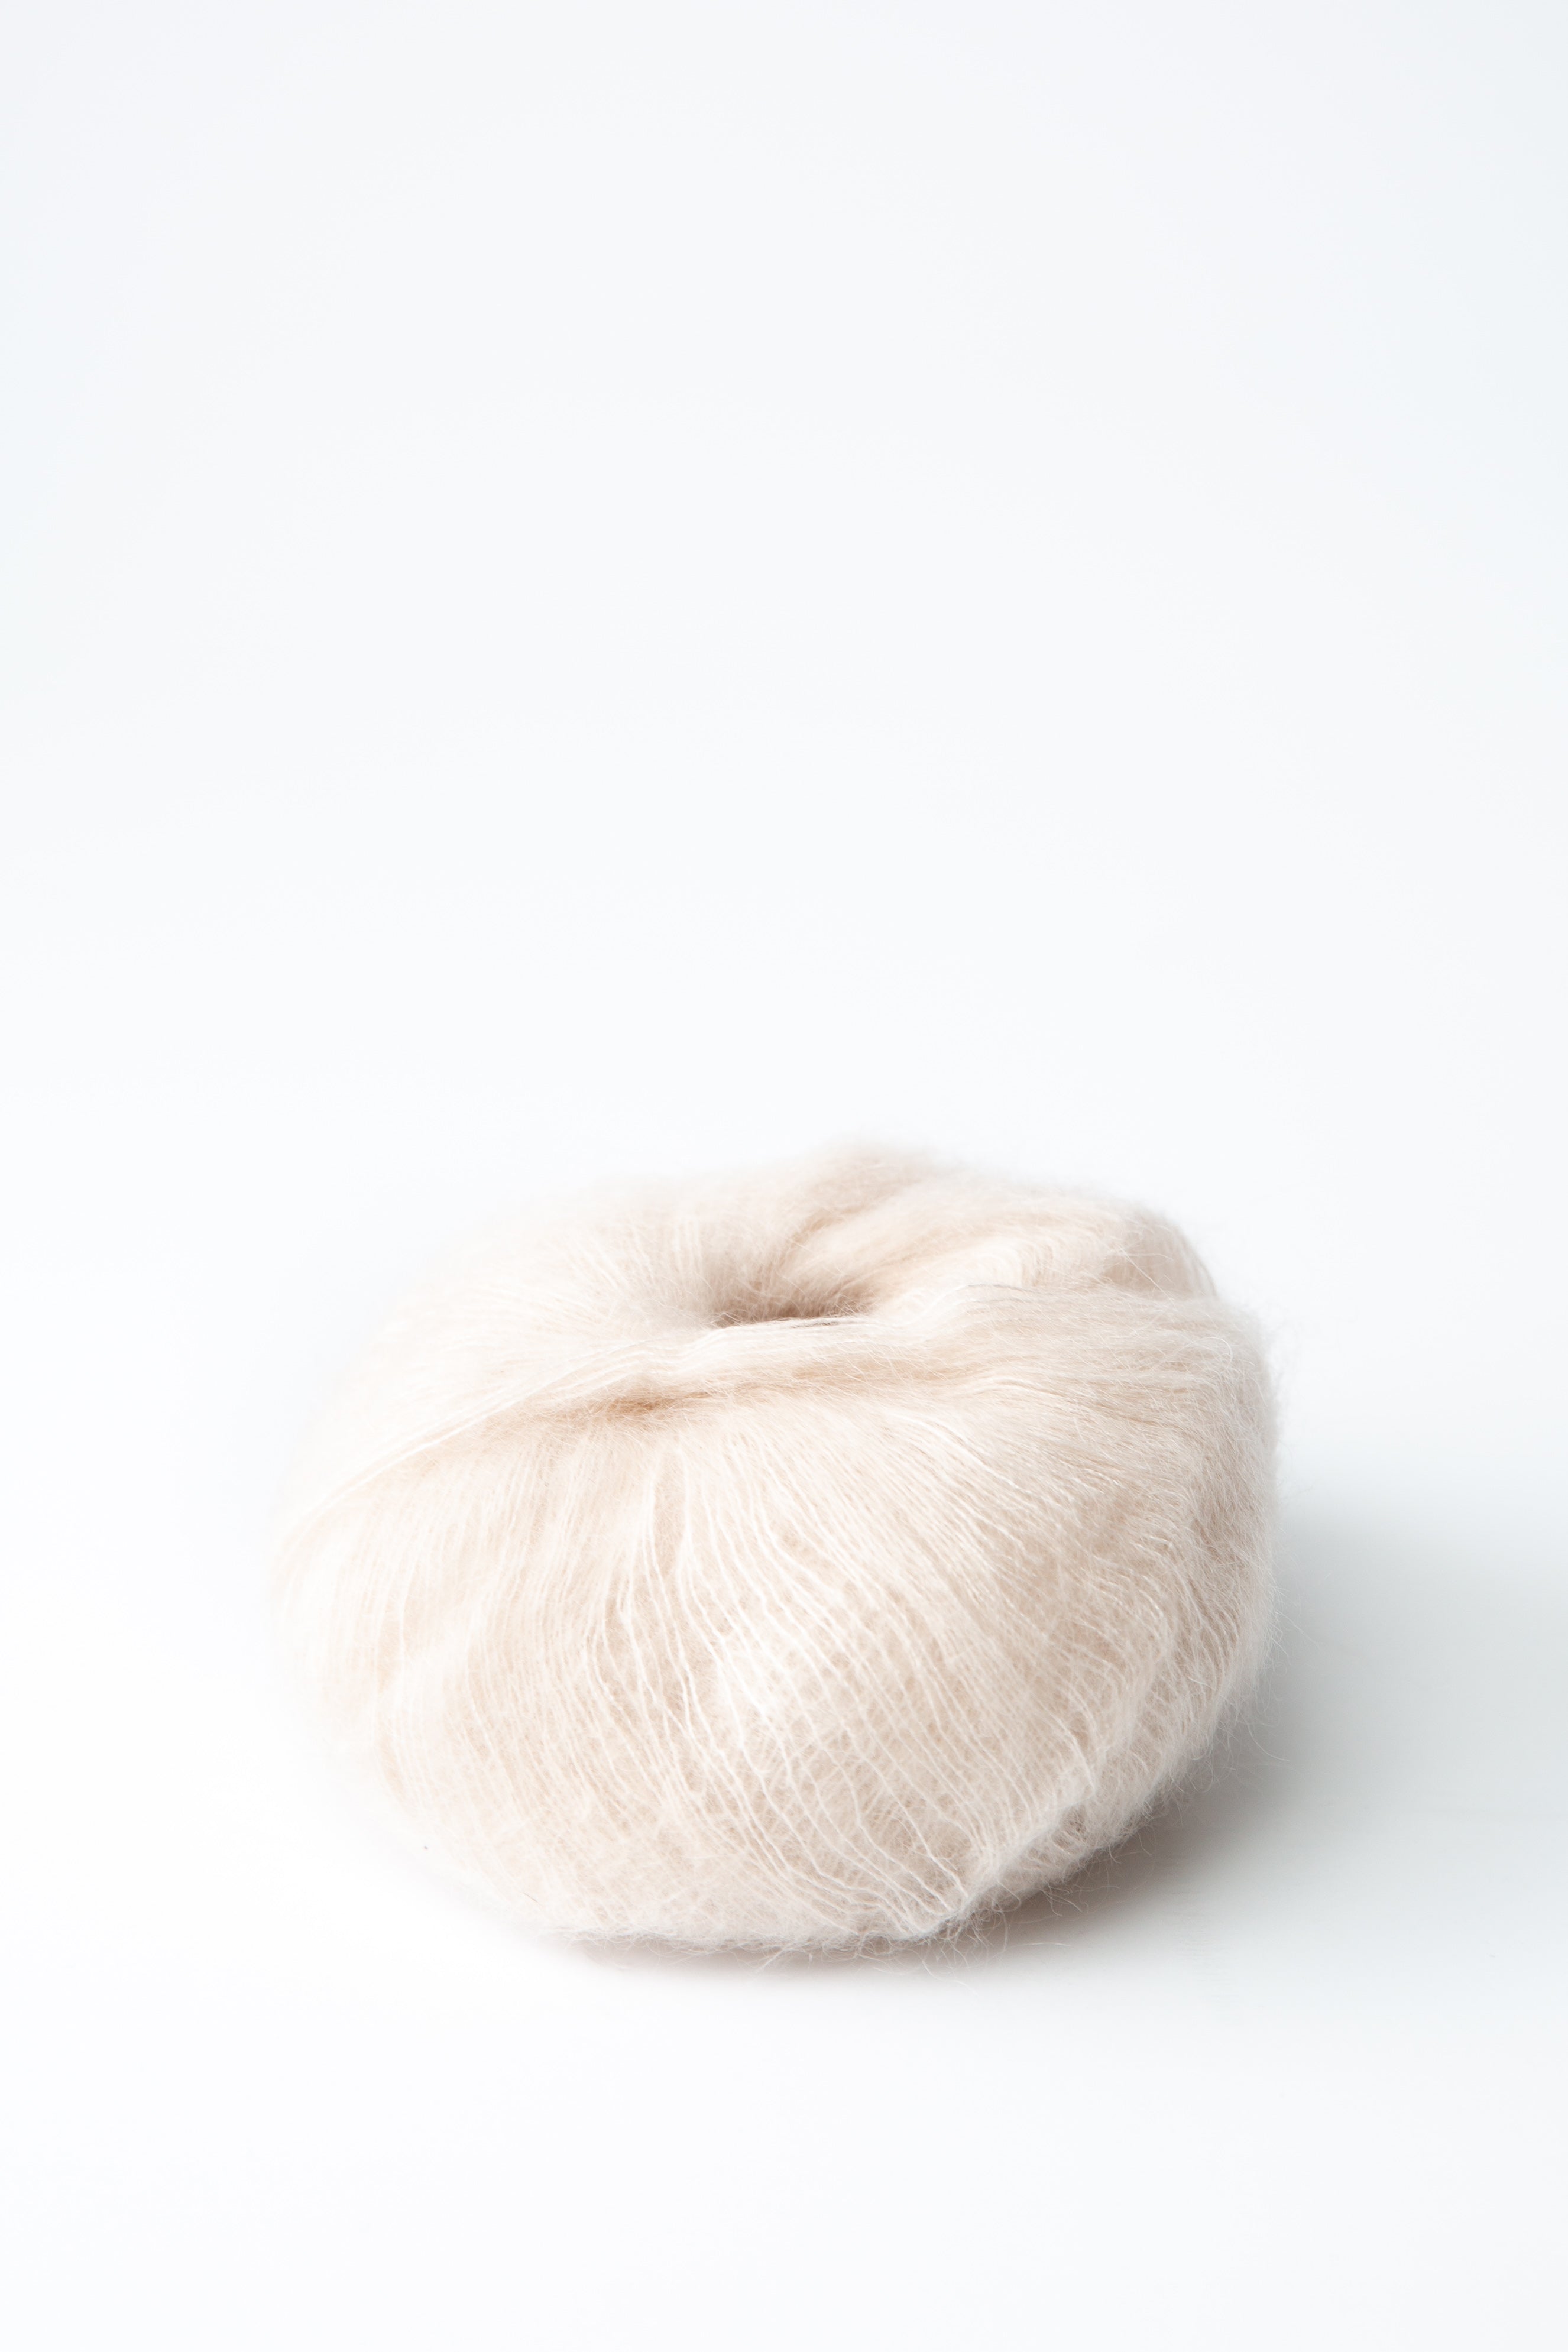 Tynn Silk Sandnes Garn | Shop Yarn Online Today - Beehive Wool Shop